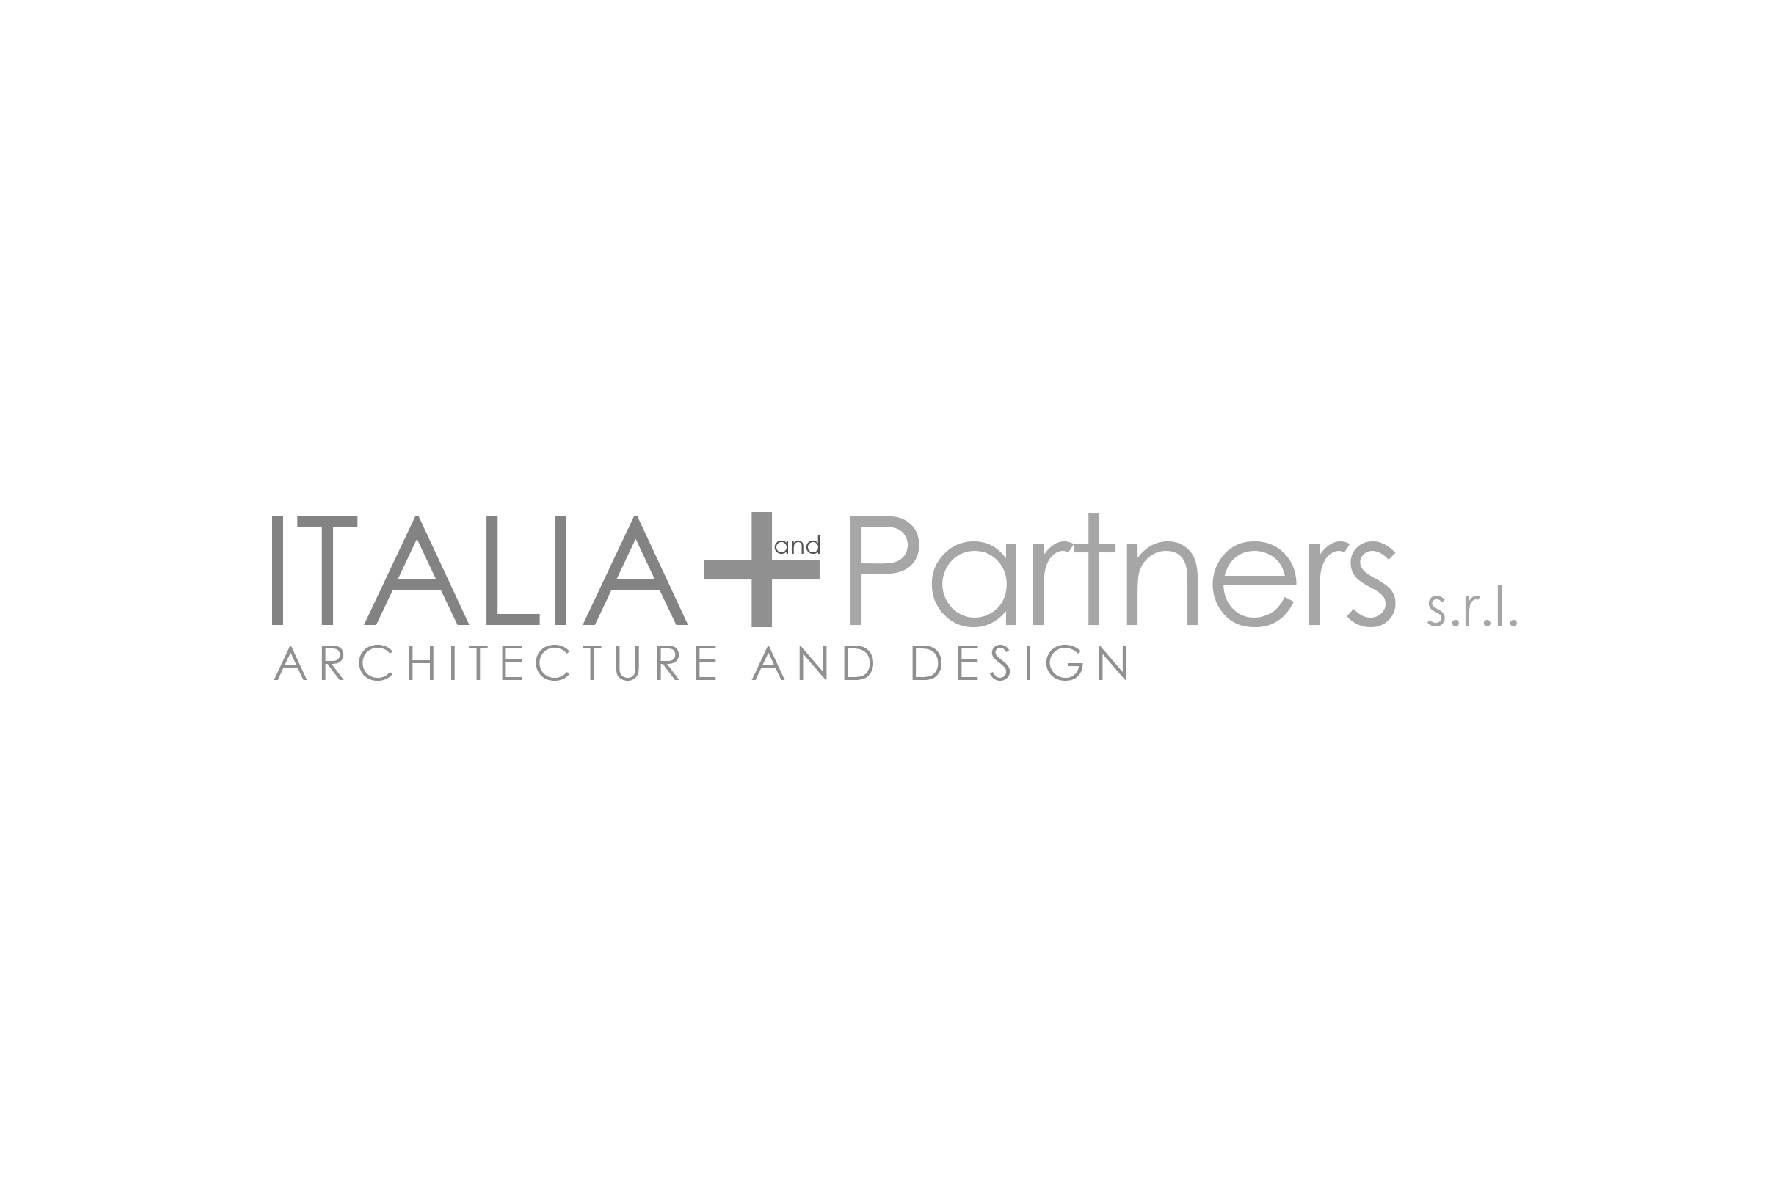 ITALIA + PARTNERS ARCHITECTURE